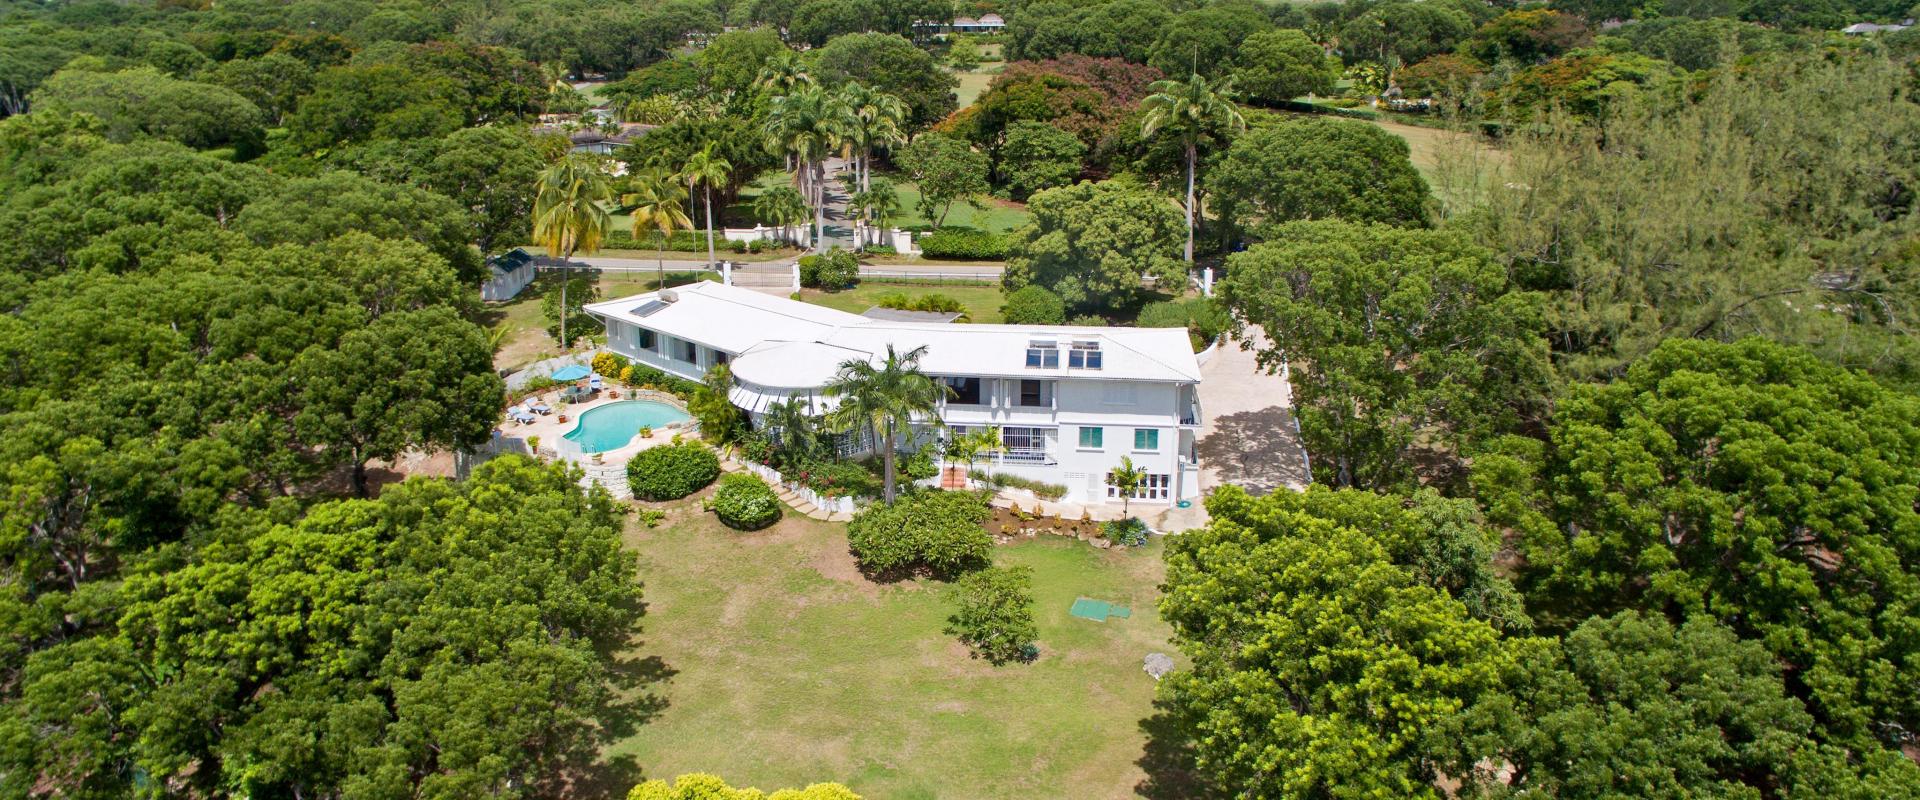 Sandy Lane Holiday Villa Barbados Halle Rose Aerial Shot of Property